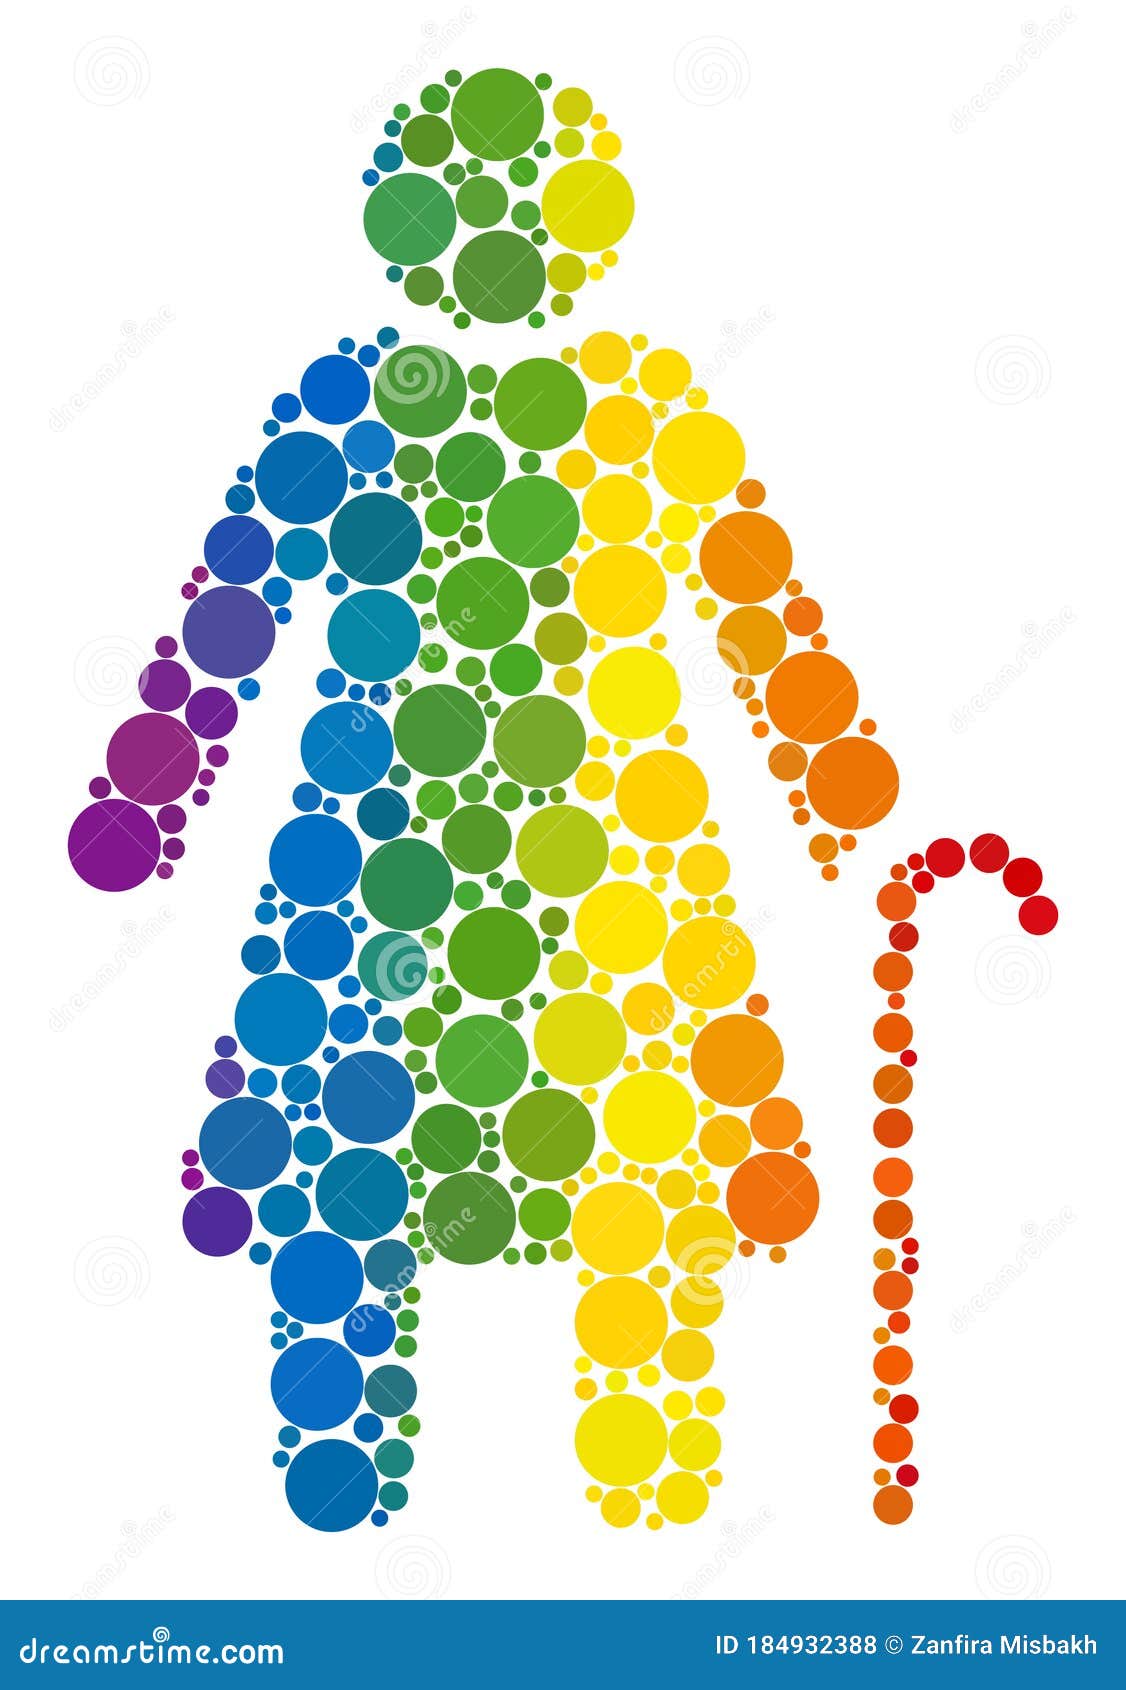 rainbow grandmother collage icon of spheric dots